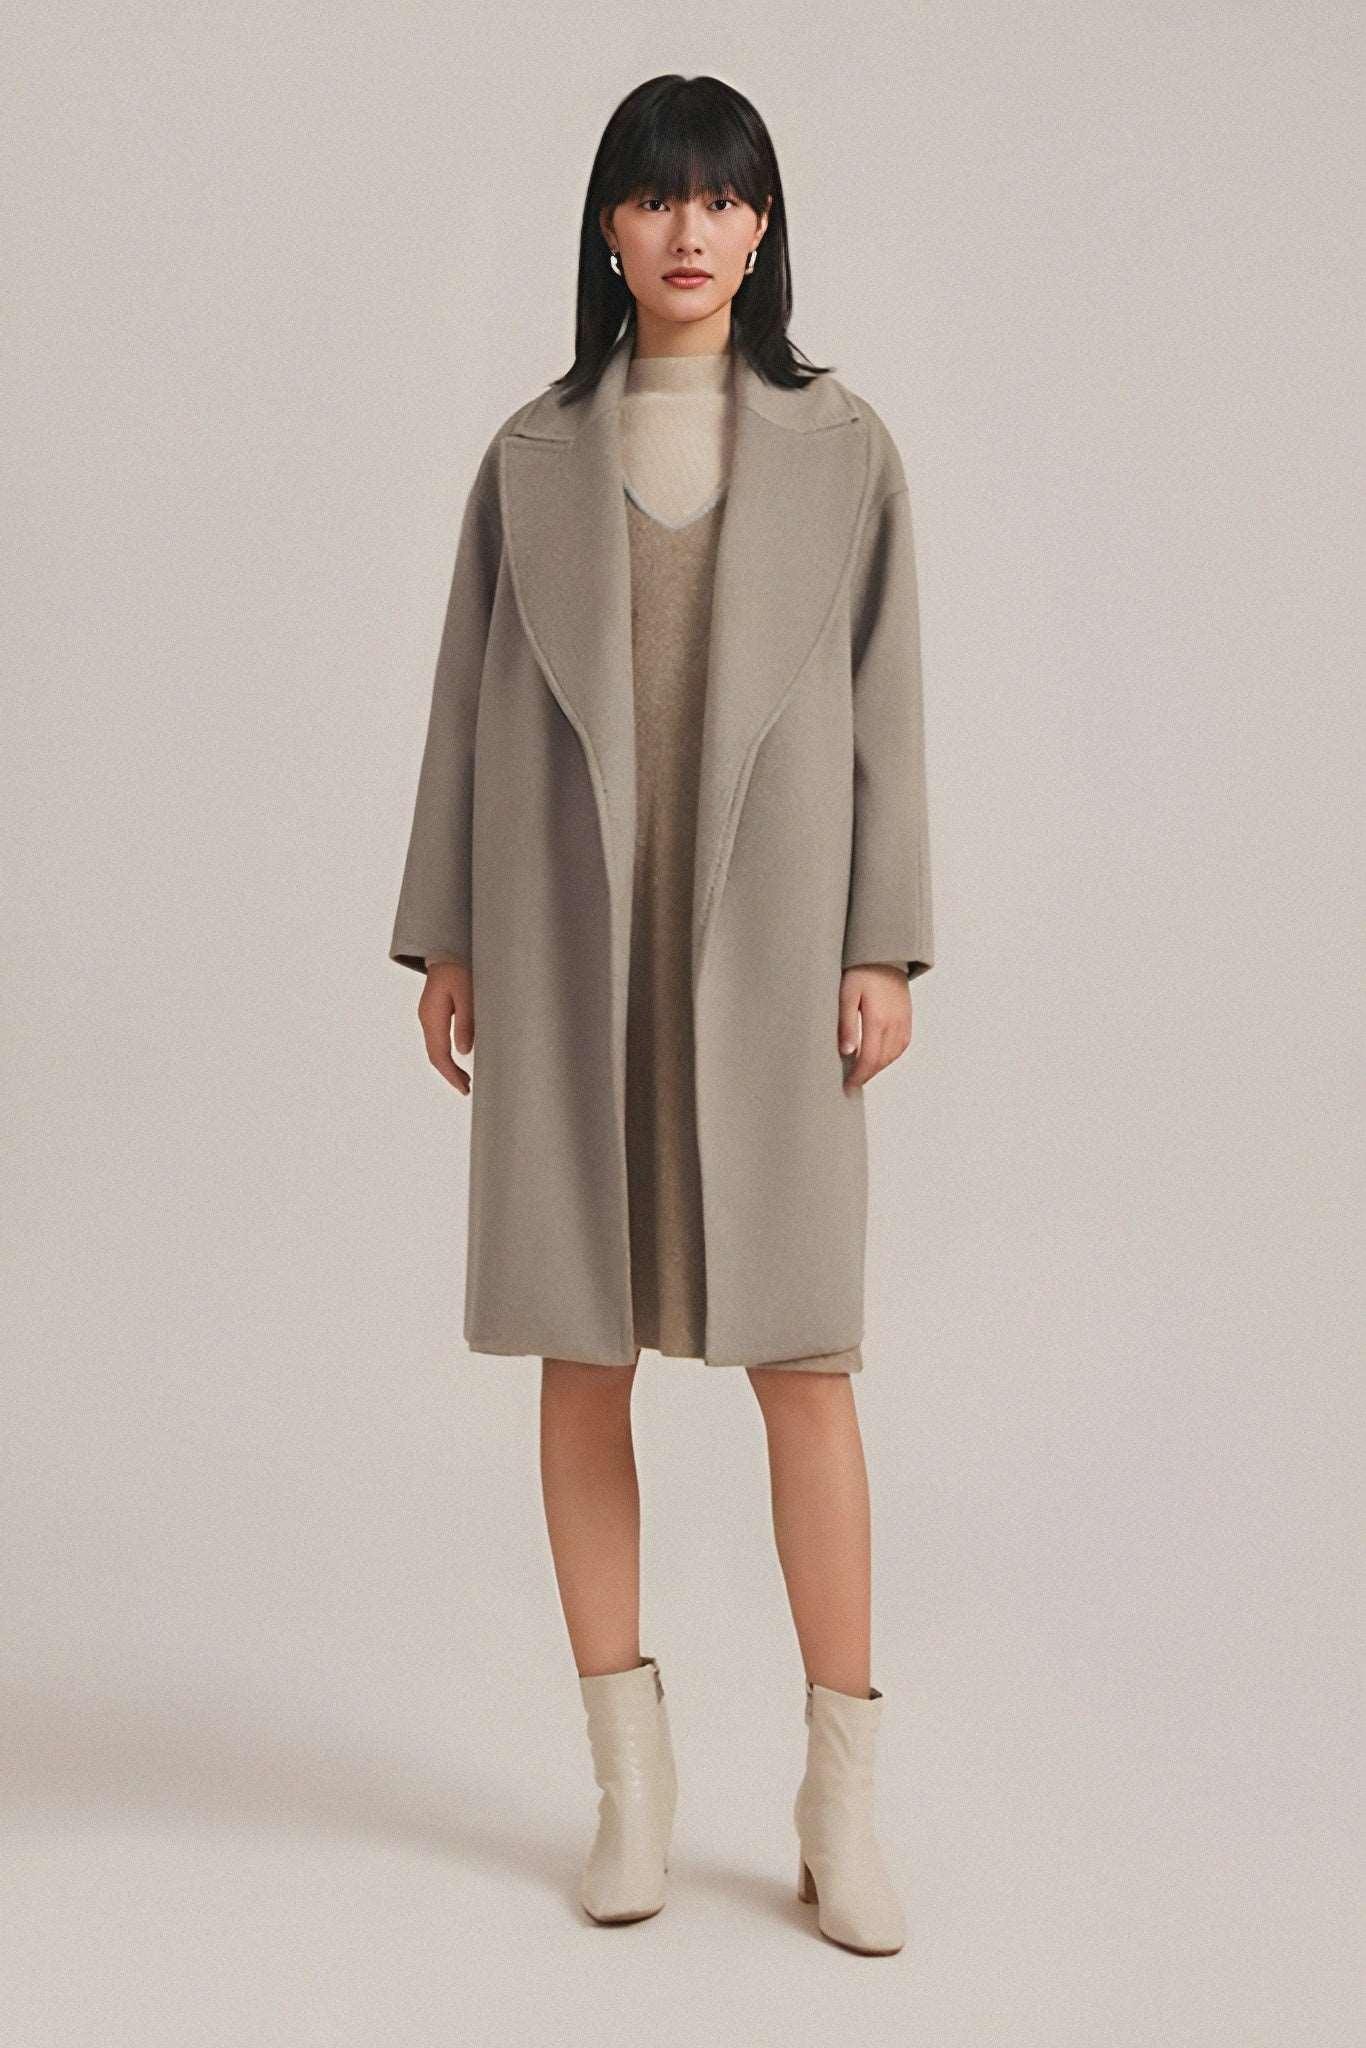 LYDIA - Medium-Length Woolen Women's Overcoat